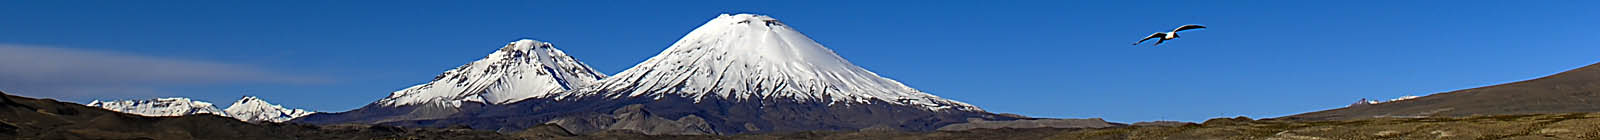 Parinacota, Pomerape, volcanoes in Chile - Banner